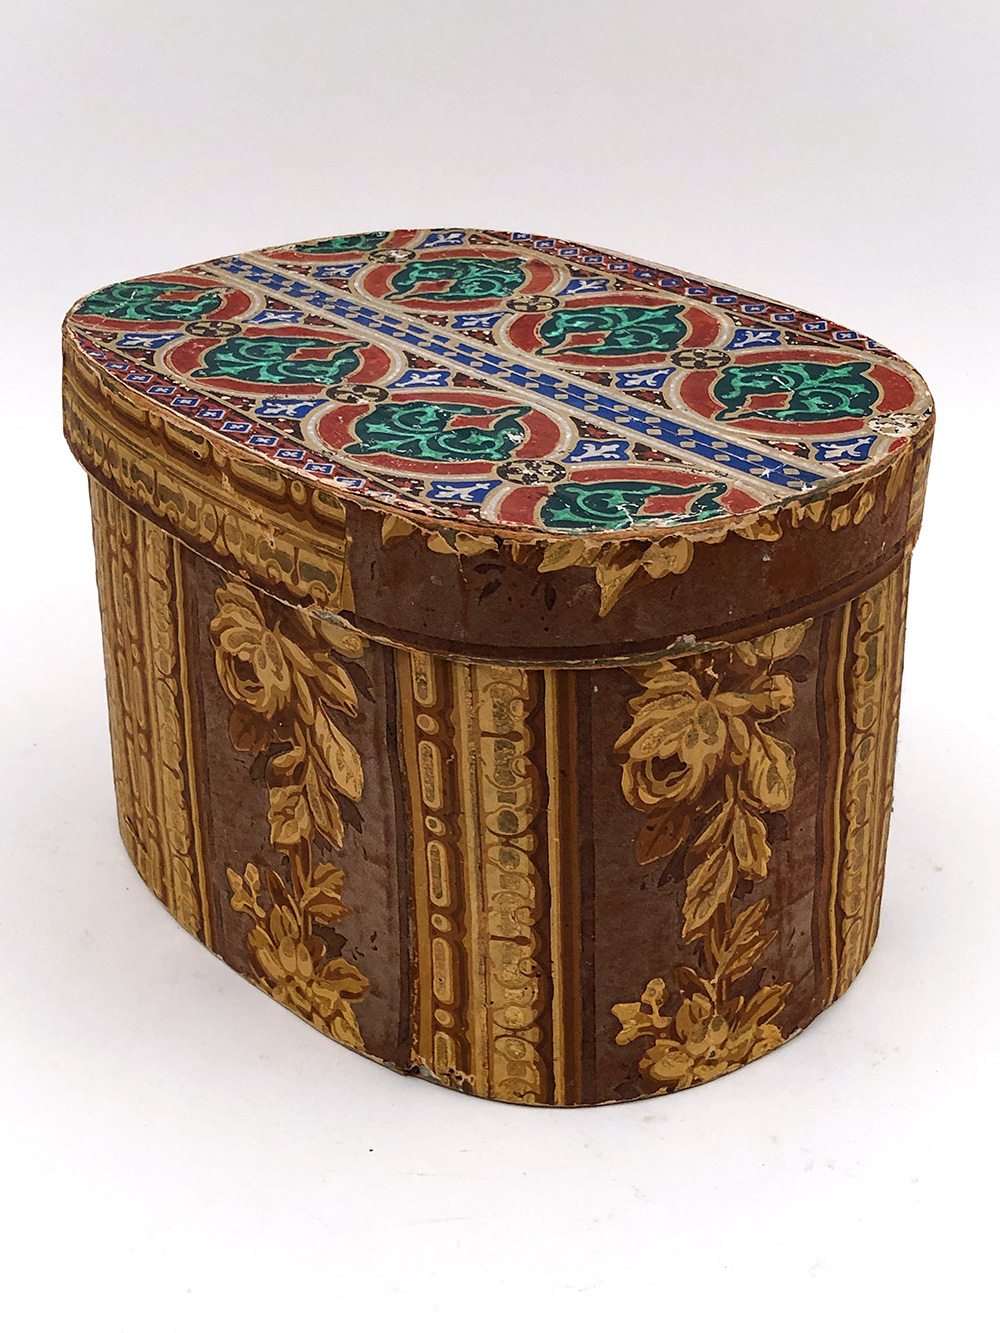 19th century antique wooden wallpaper box vibrant gold